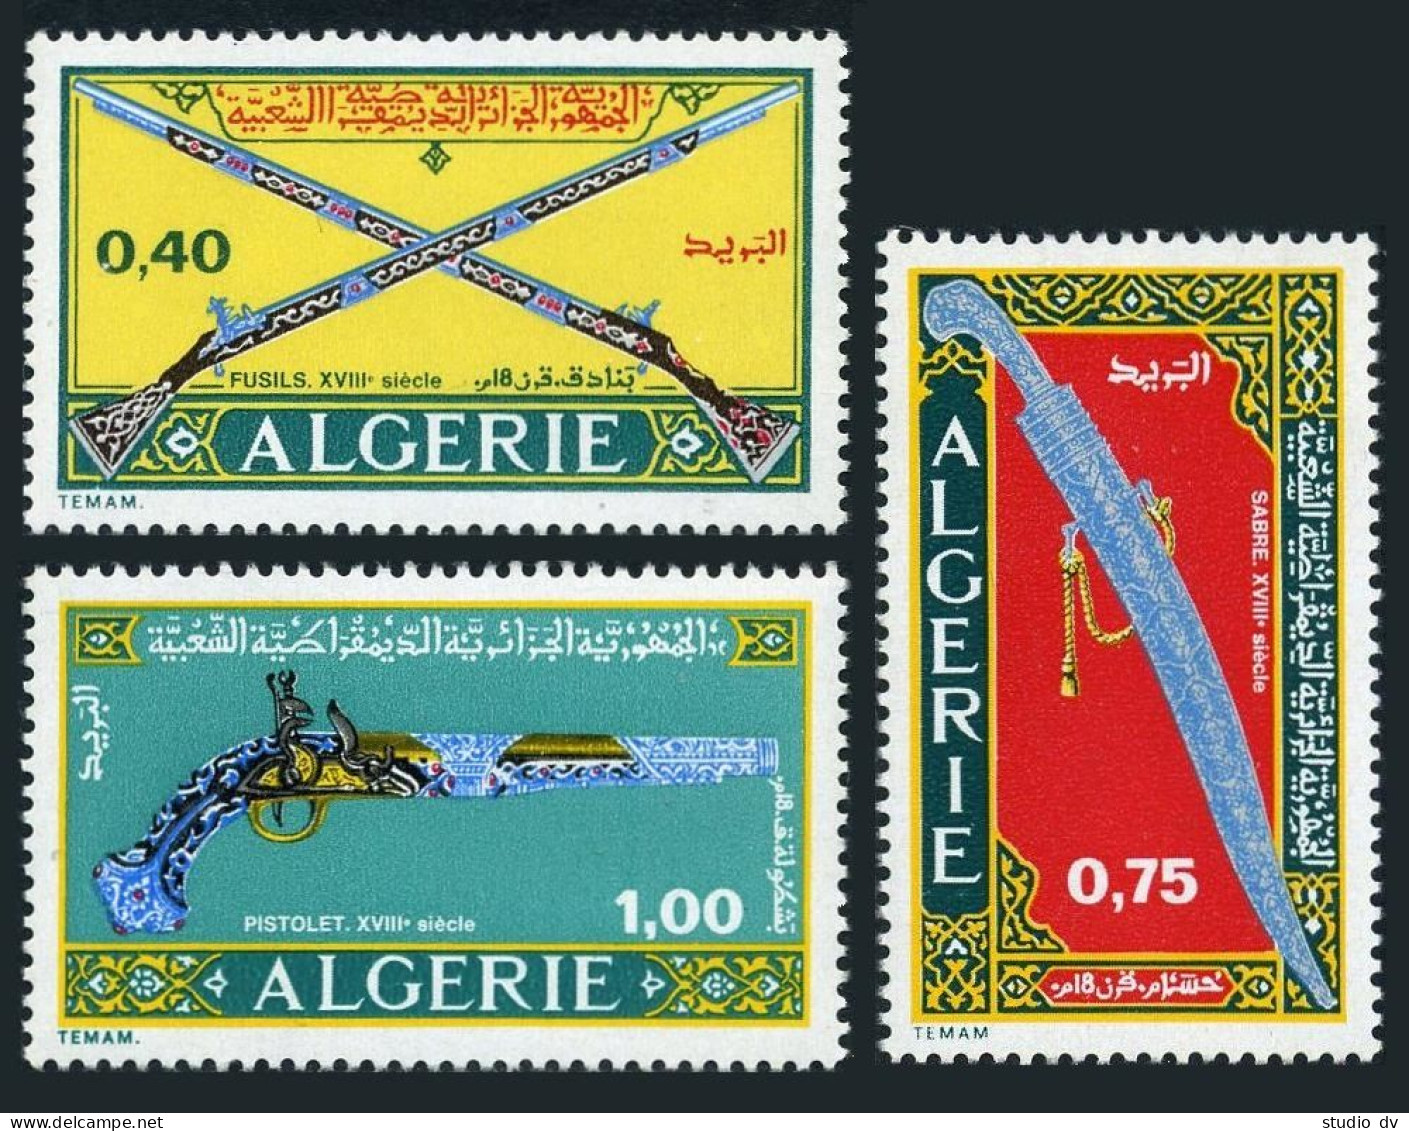 Algeria 444-446,lightly Hinged.Michel 553-555. Weapons 1970.Saber,Guns,Pistol. - Algerien (1962-...)